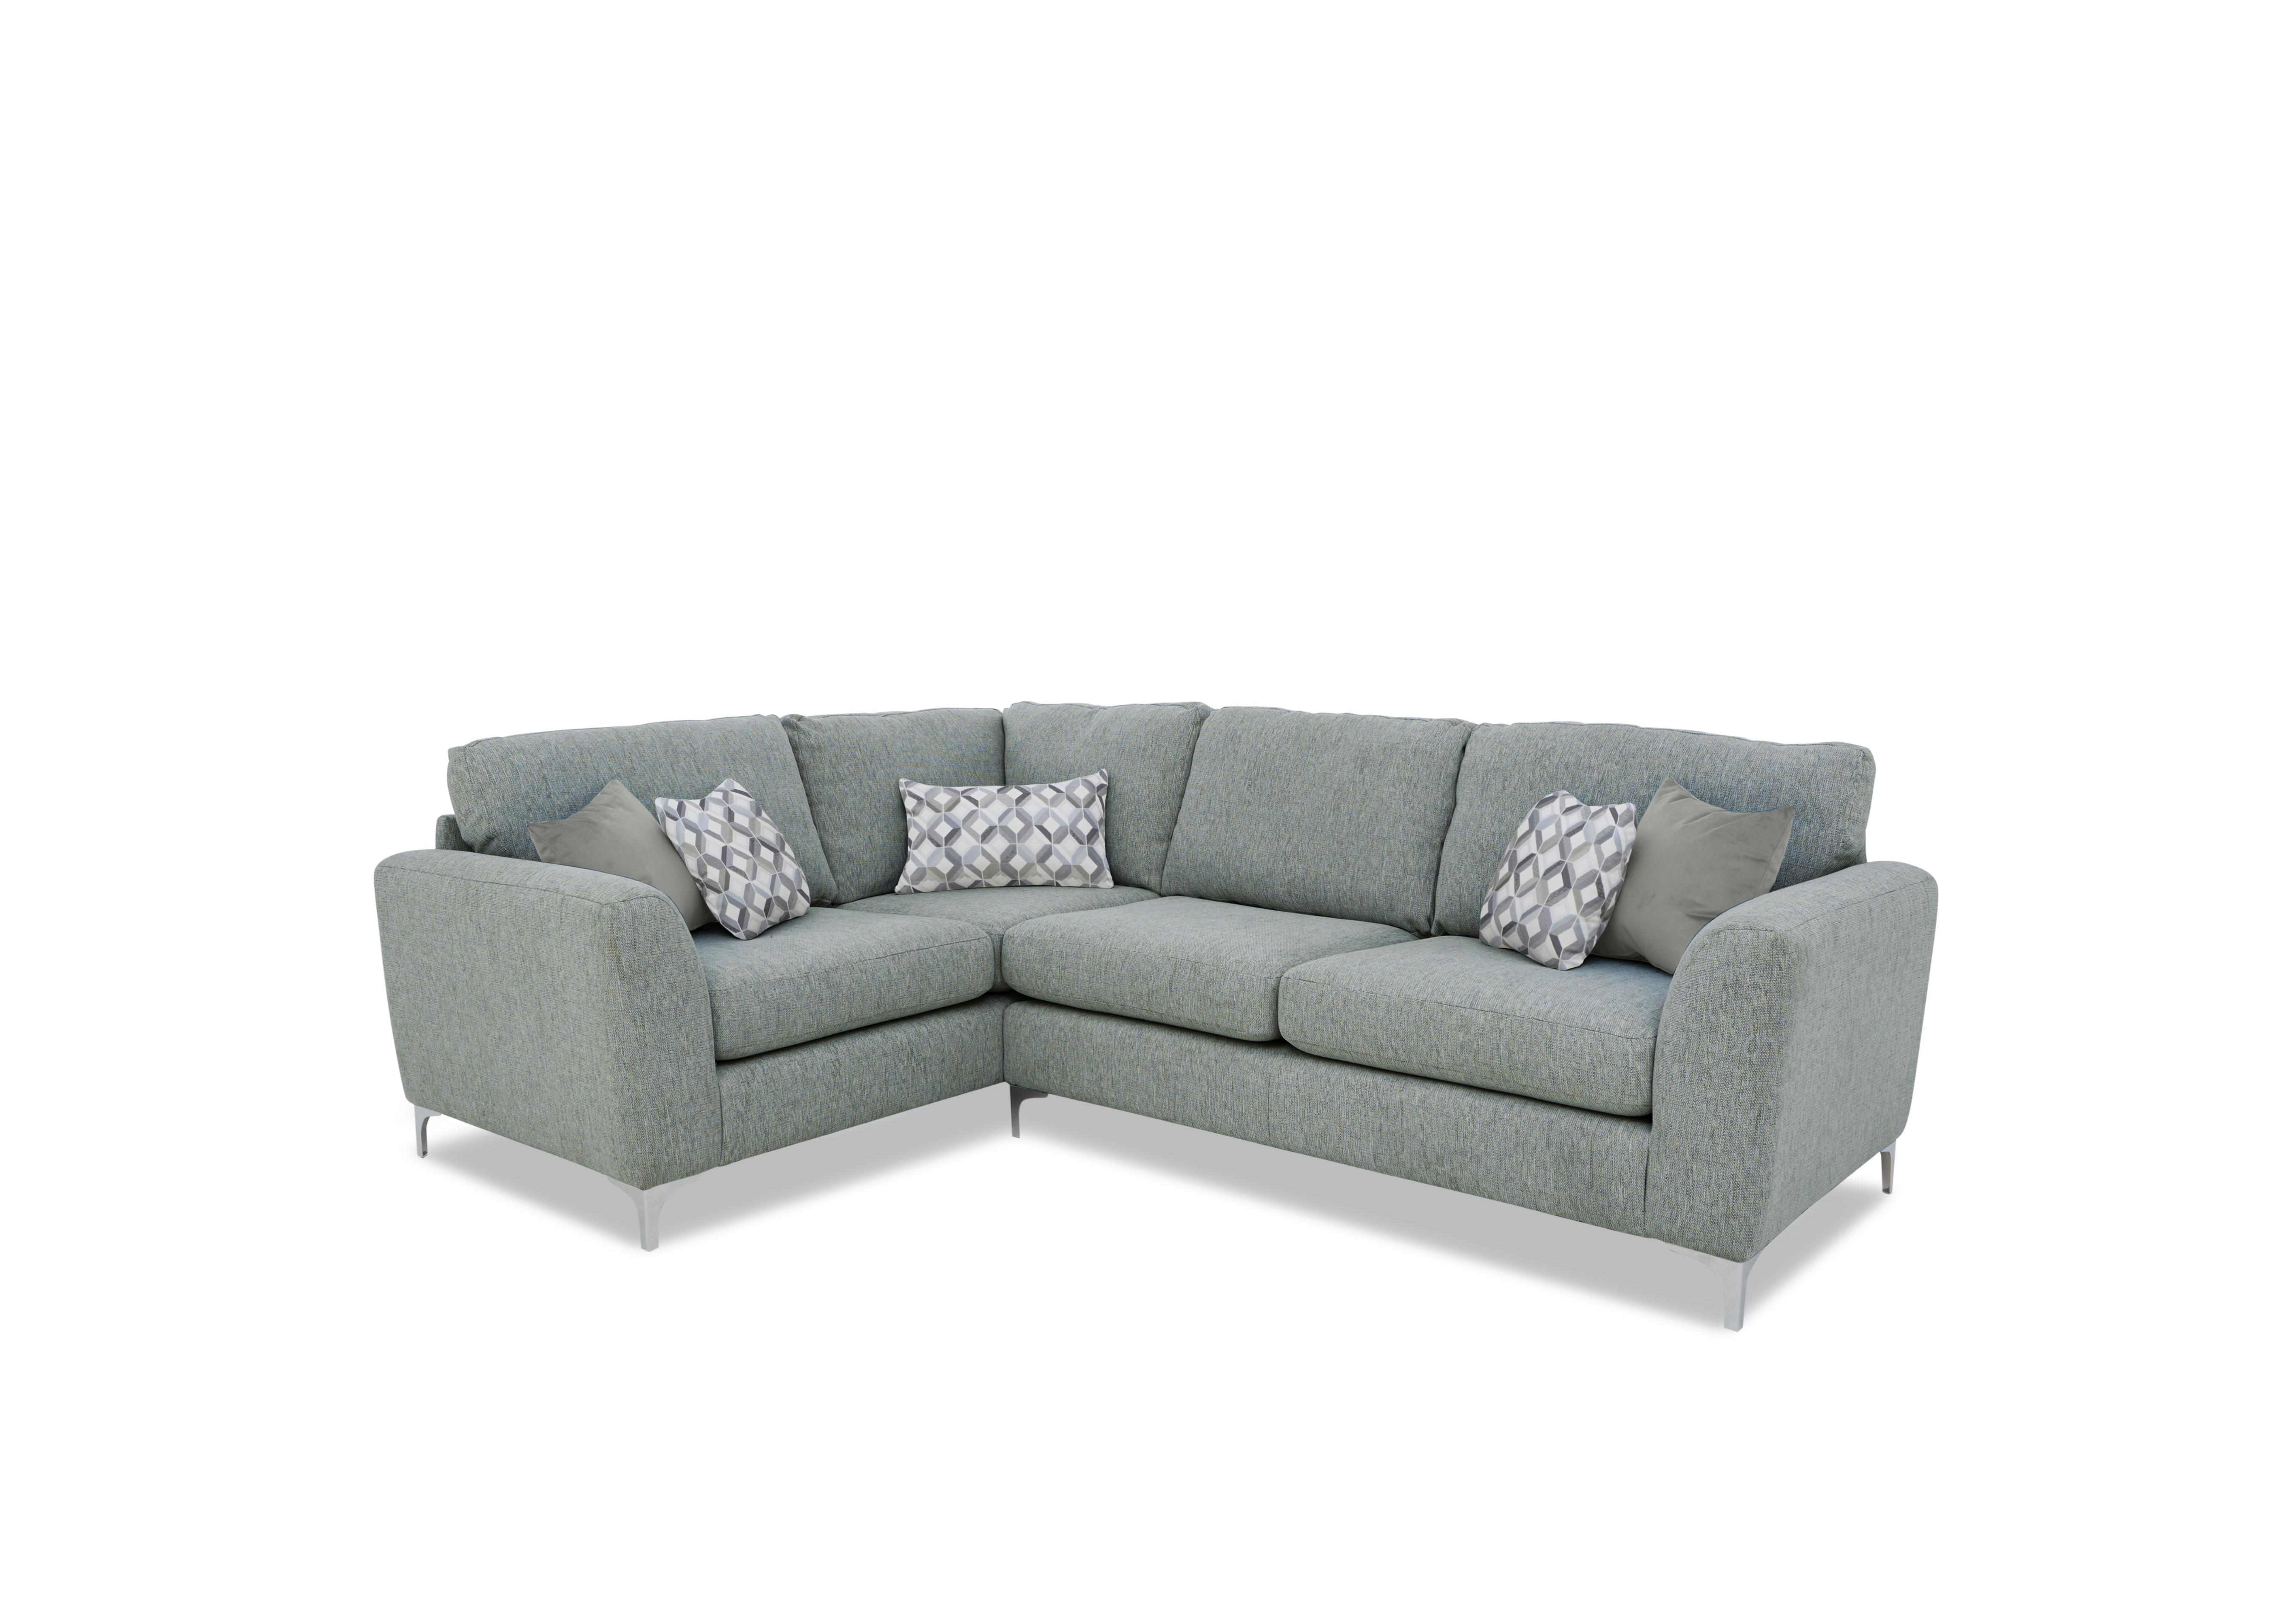 Pippa Fabric Small Corner Sofa in Blue Ebony Ch Ft on Furniture Village